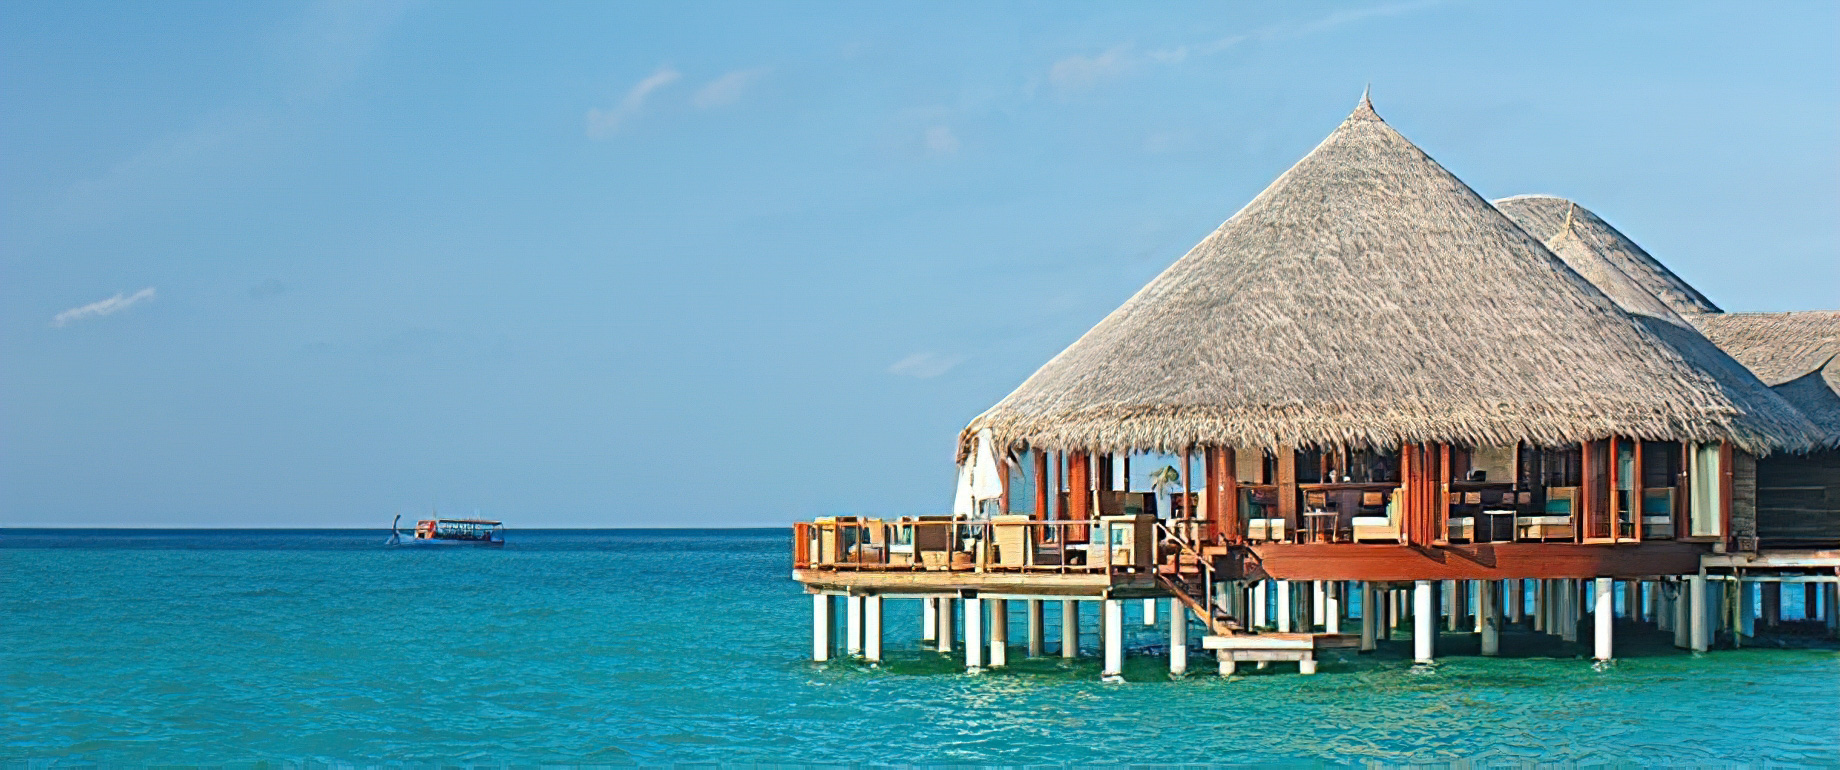 Constance Halaveli Resort – North Ari Atoll, Maldives – Jing Overwater Restaurant